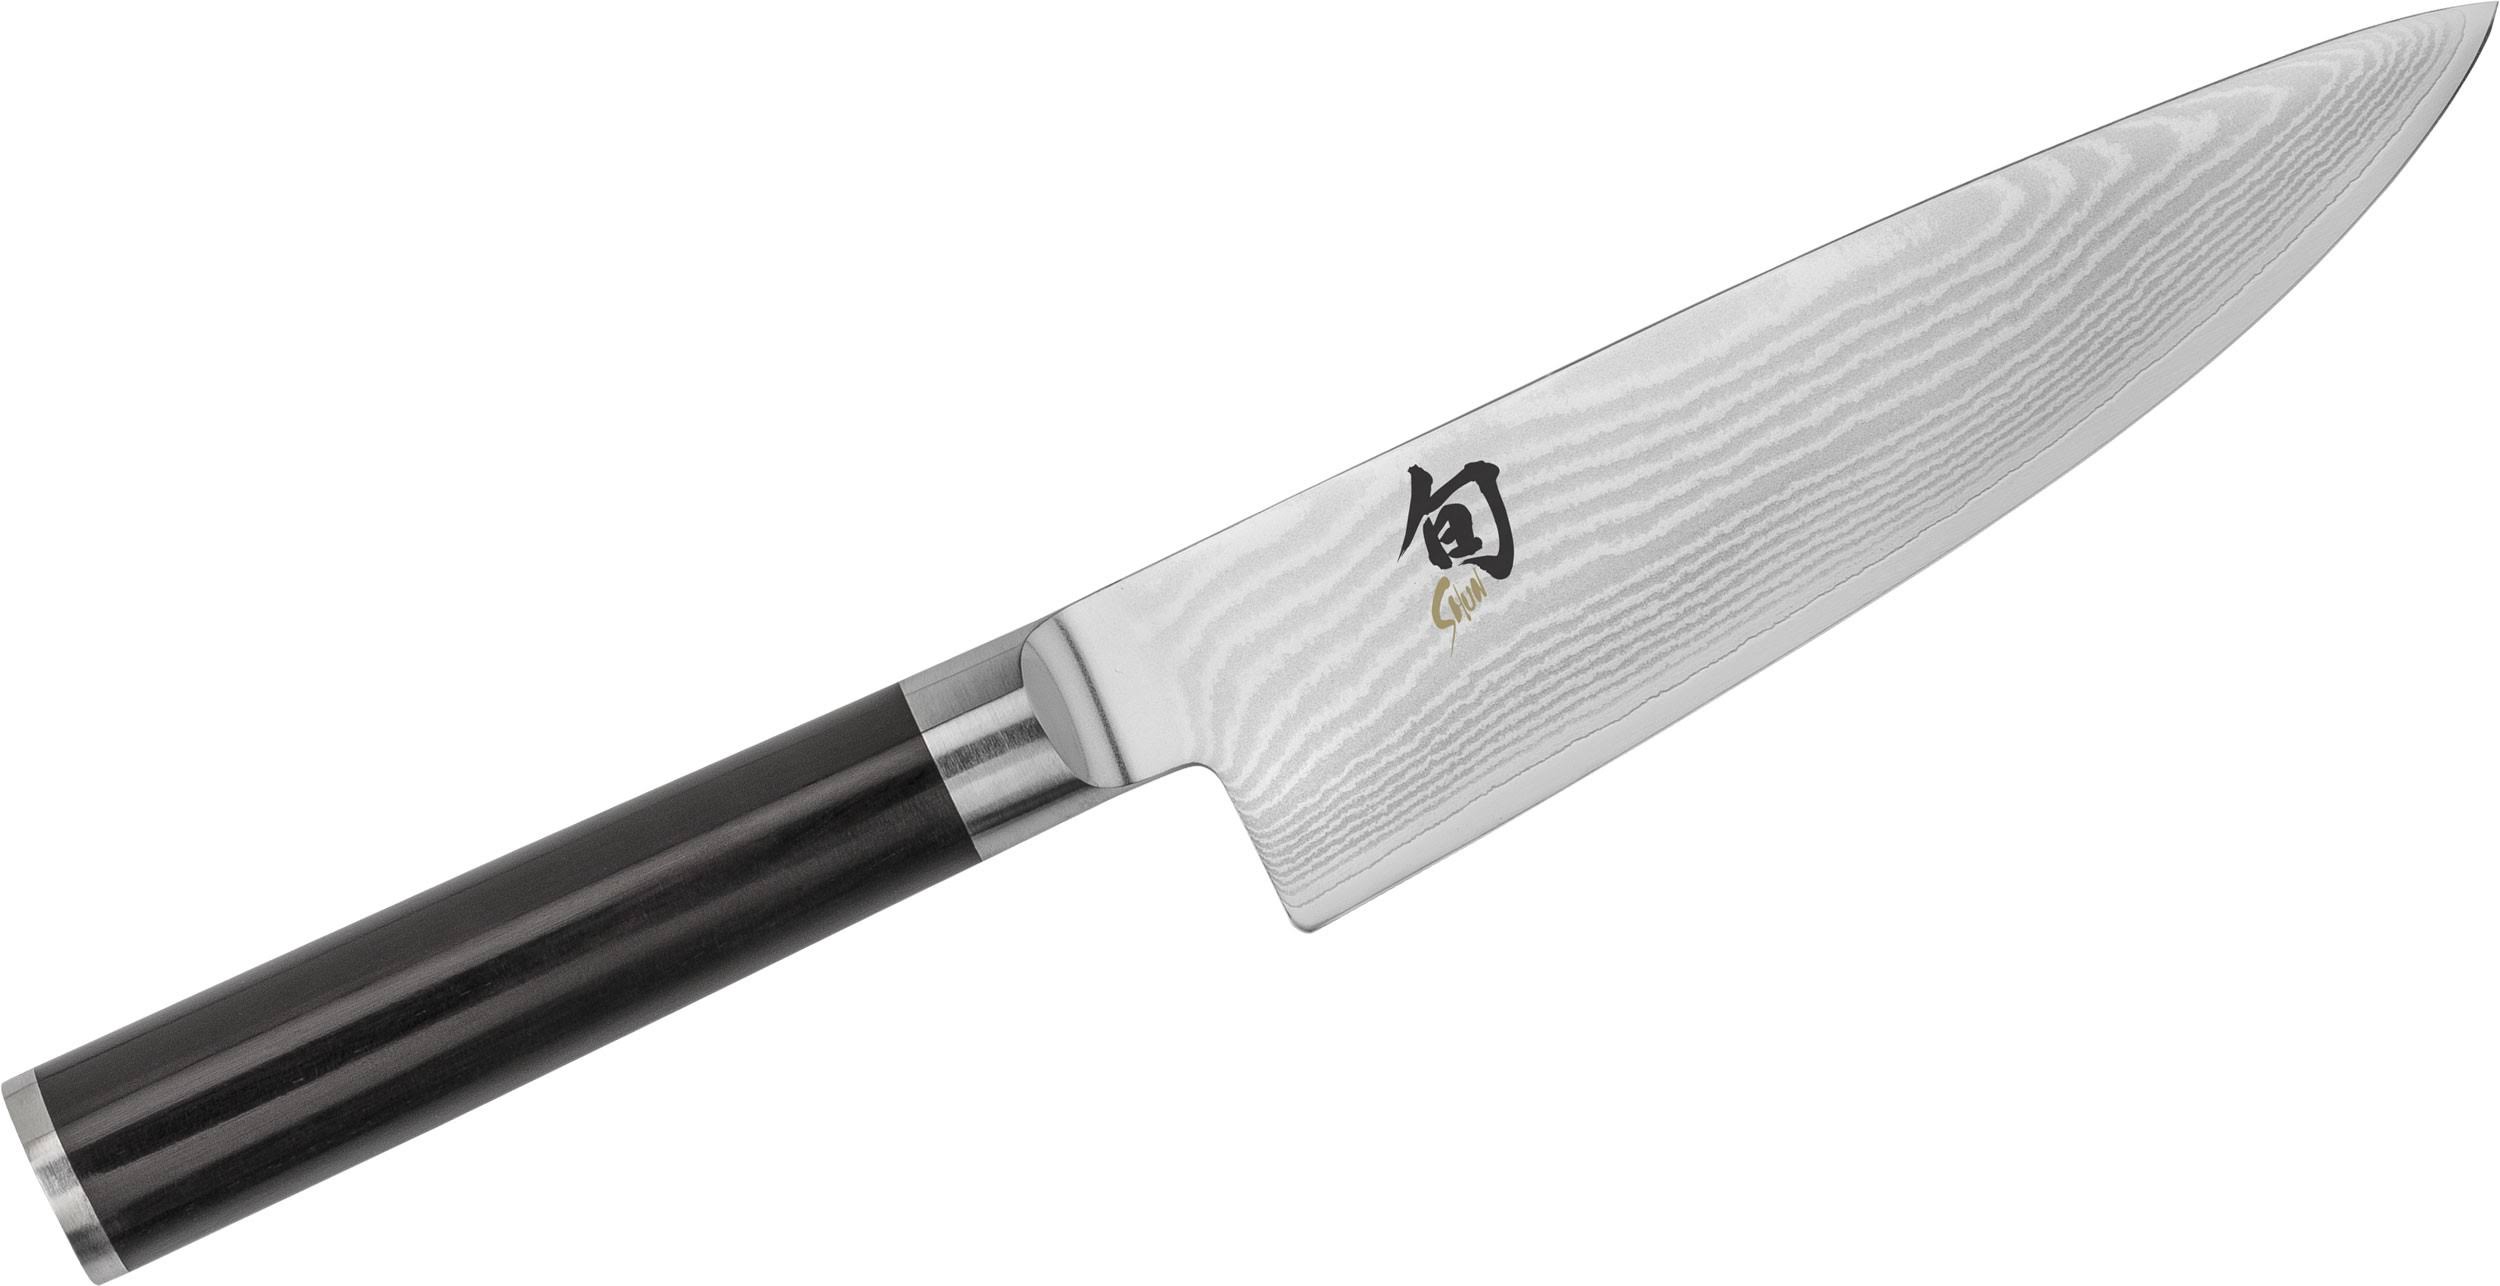 Kai Shun Classic Chefs Knife - 6"